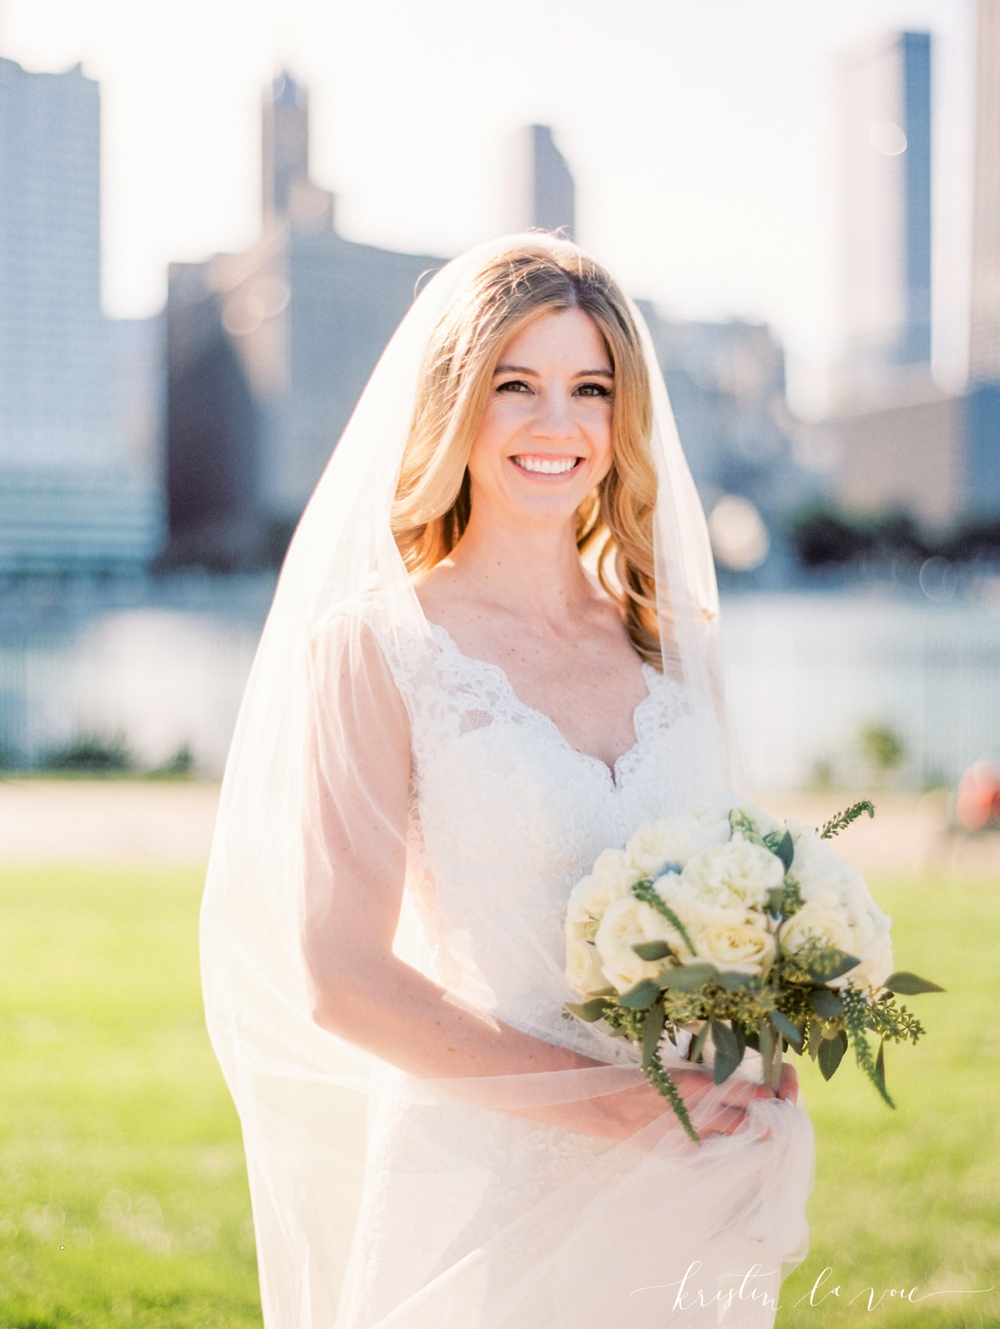  Lauren + Brendan | Chicago wedding | Liancarlo 5802 from Little White Dress Bridal Shop in Denver | Kristin La Voie photography 